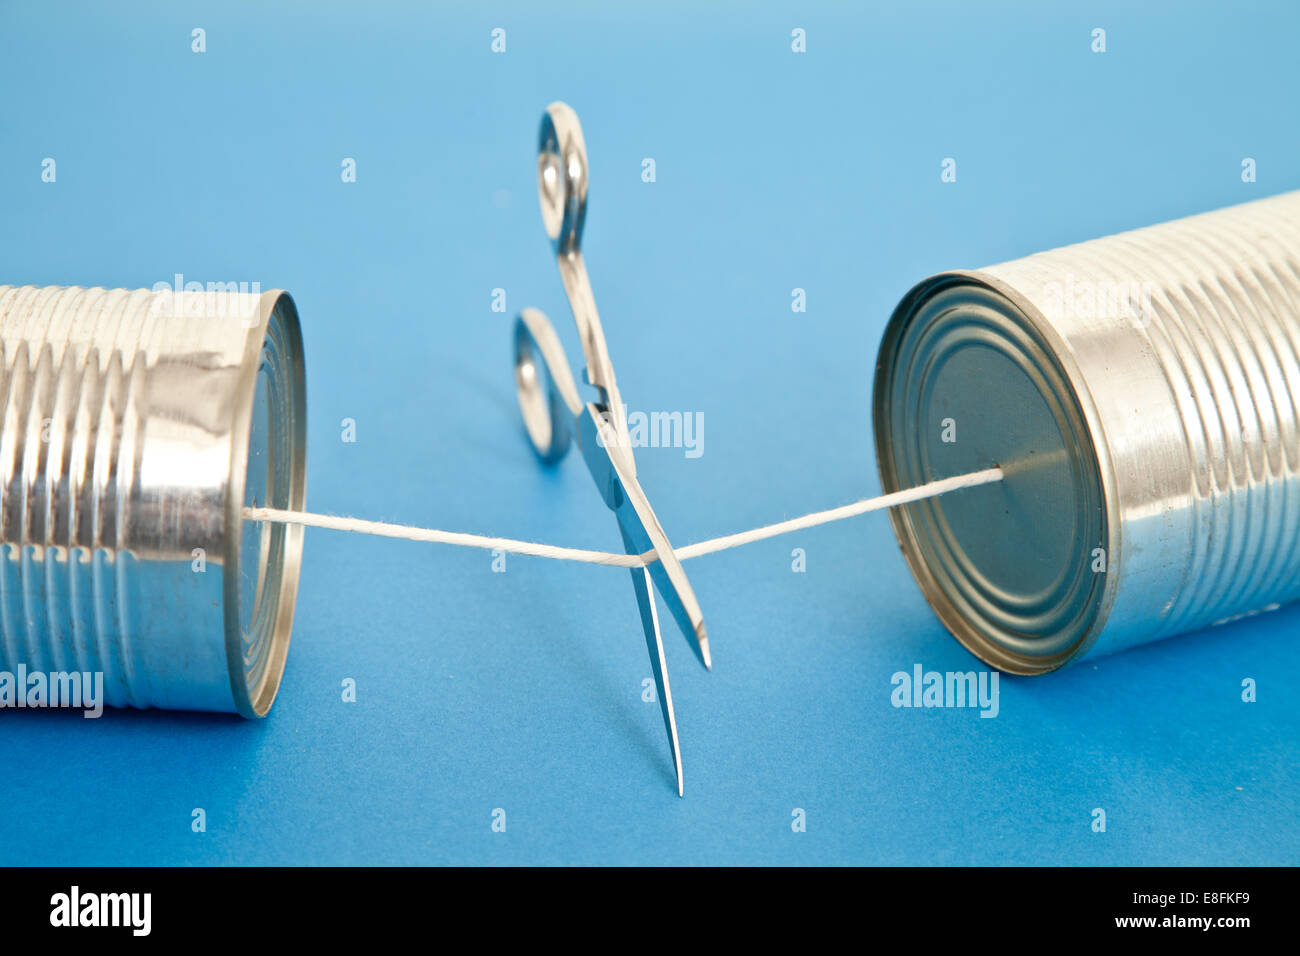 Scissors cutting Tin Can phone string Stock Photo